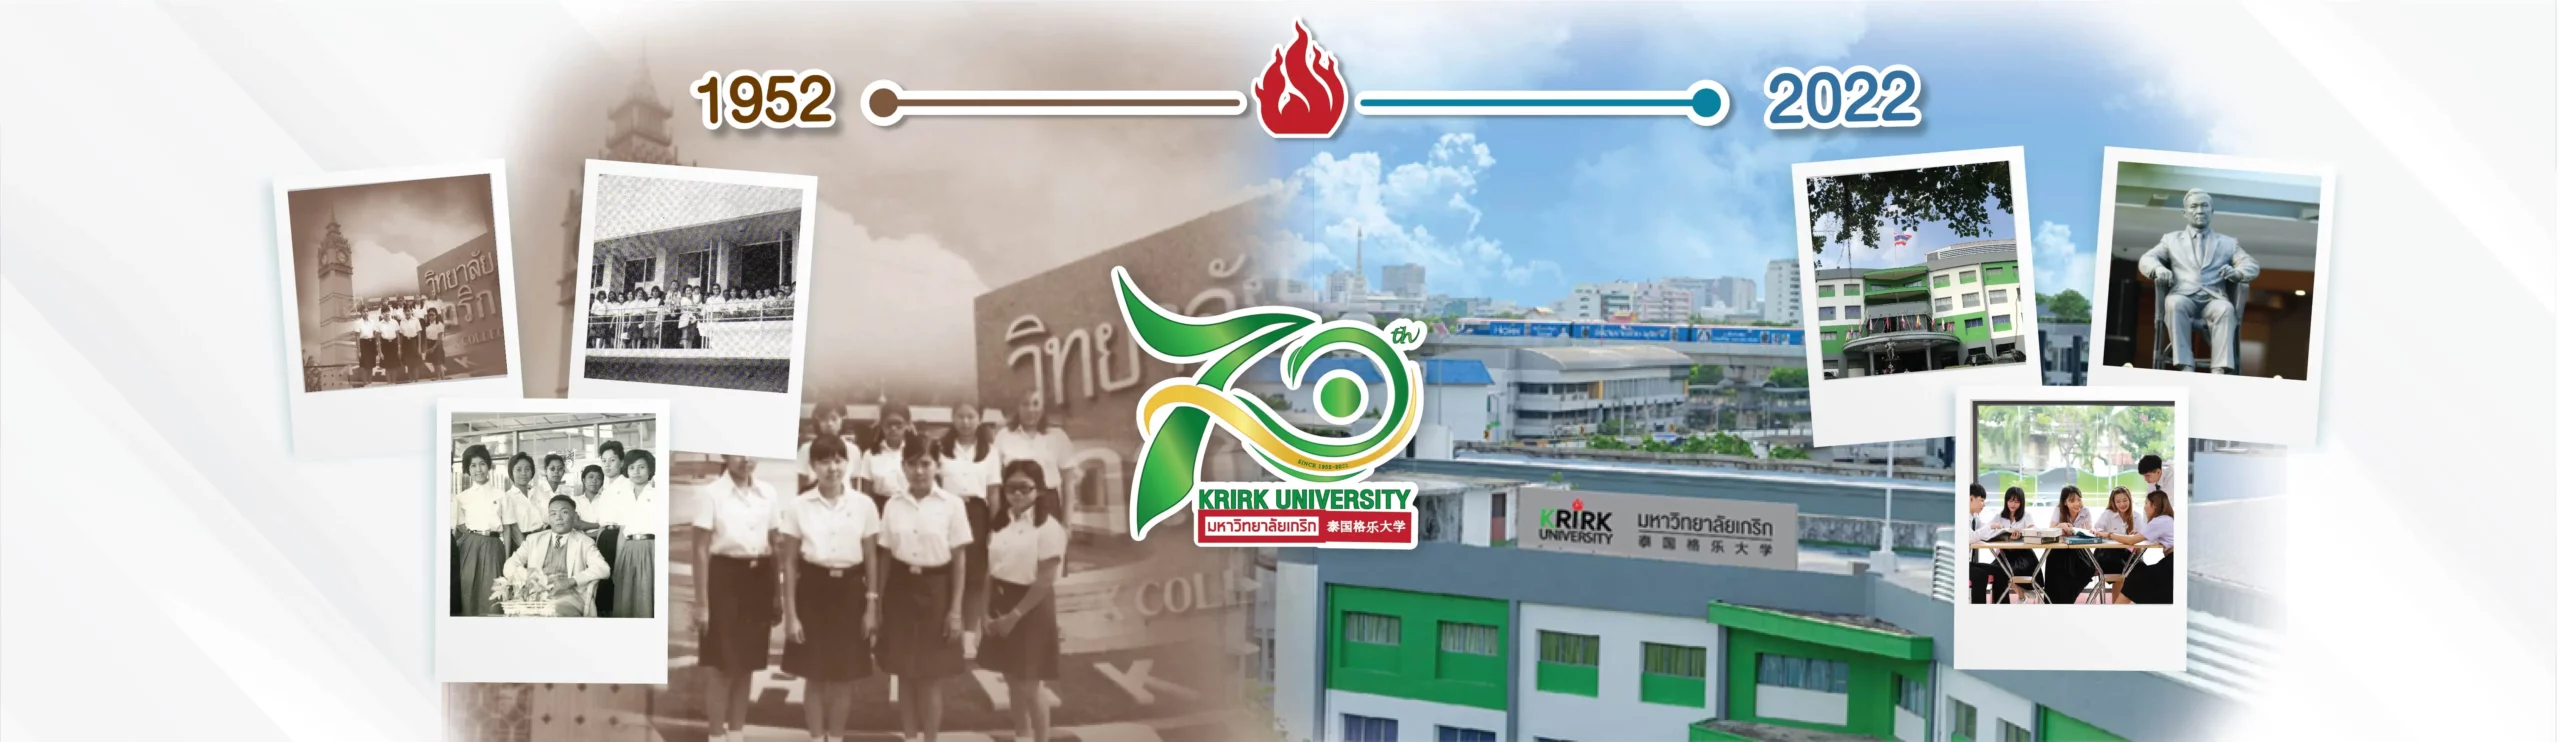 Krirk University 70th Anniversary